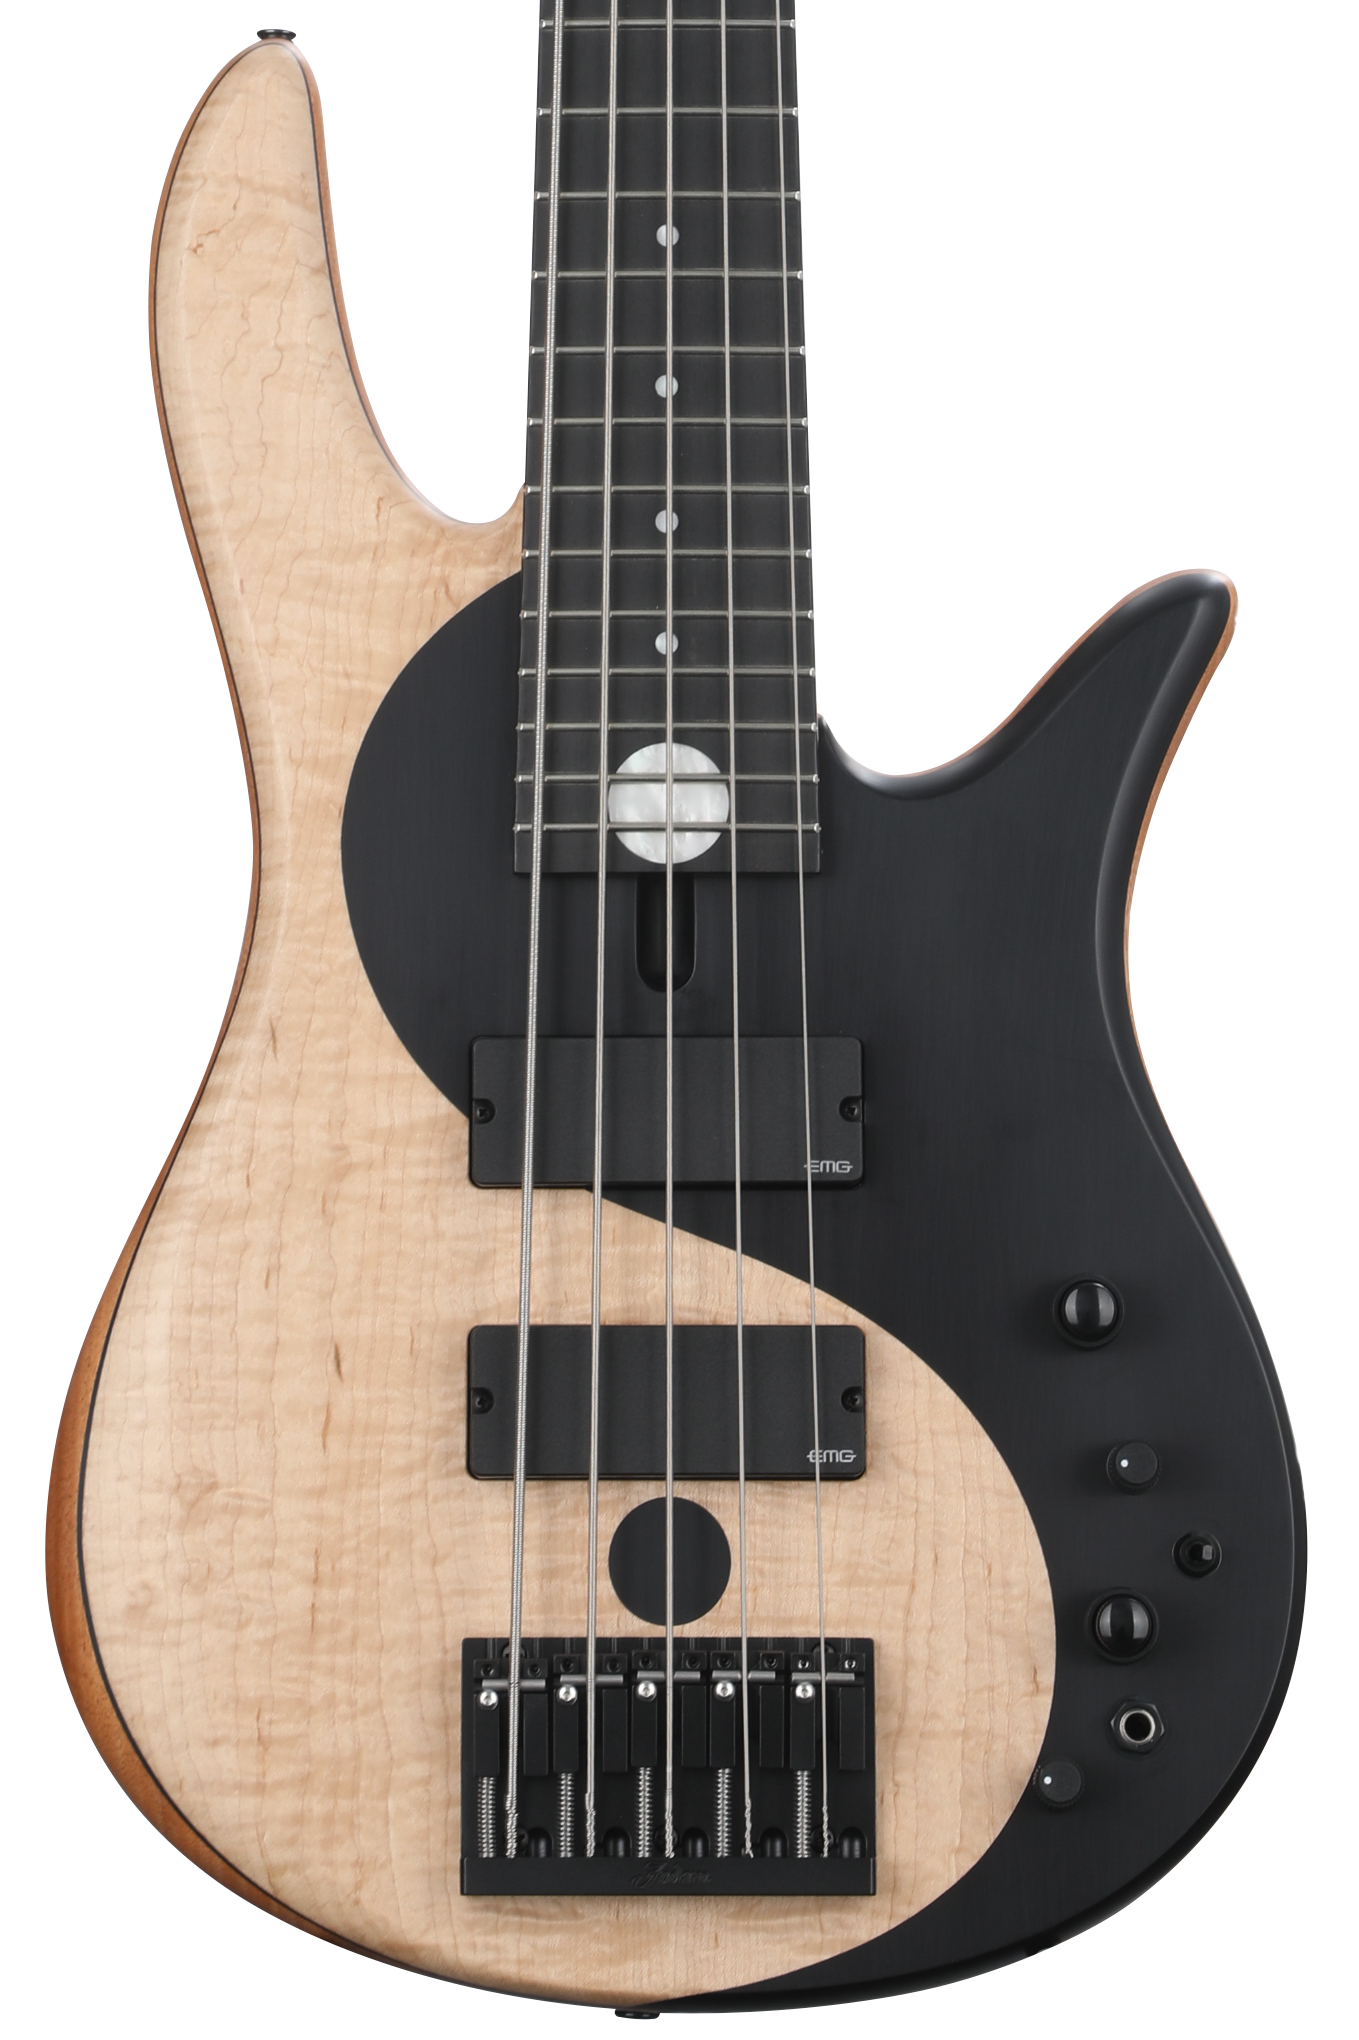 Fodera Yin Yang 5 Standard Bass Guitar - Blister Maple with 19.0mm 